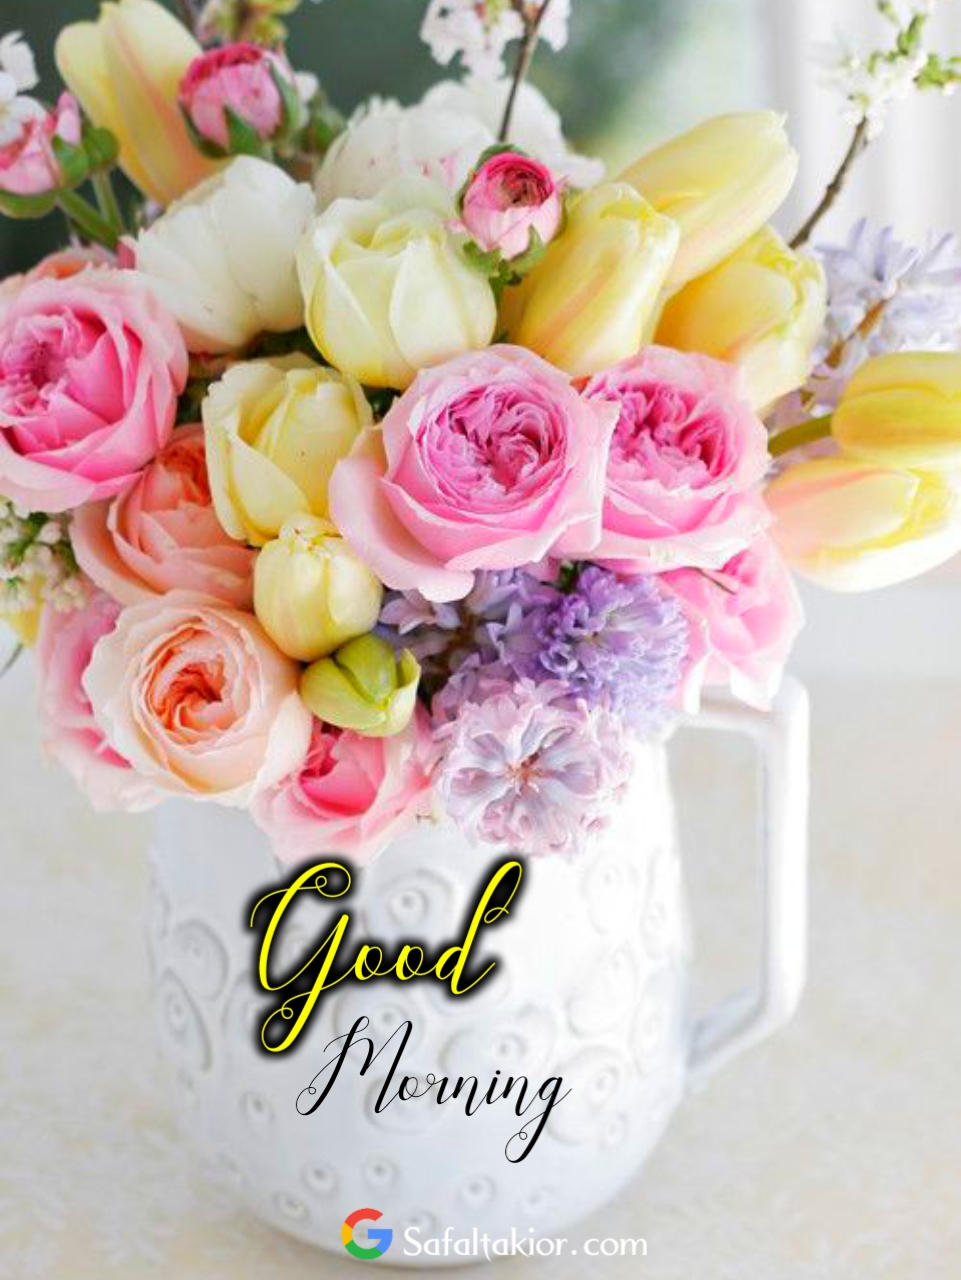 good morning images for flower